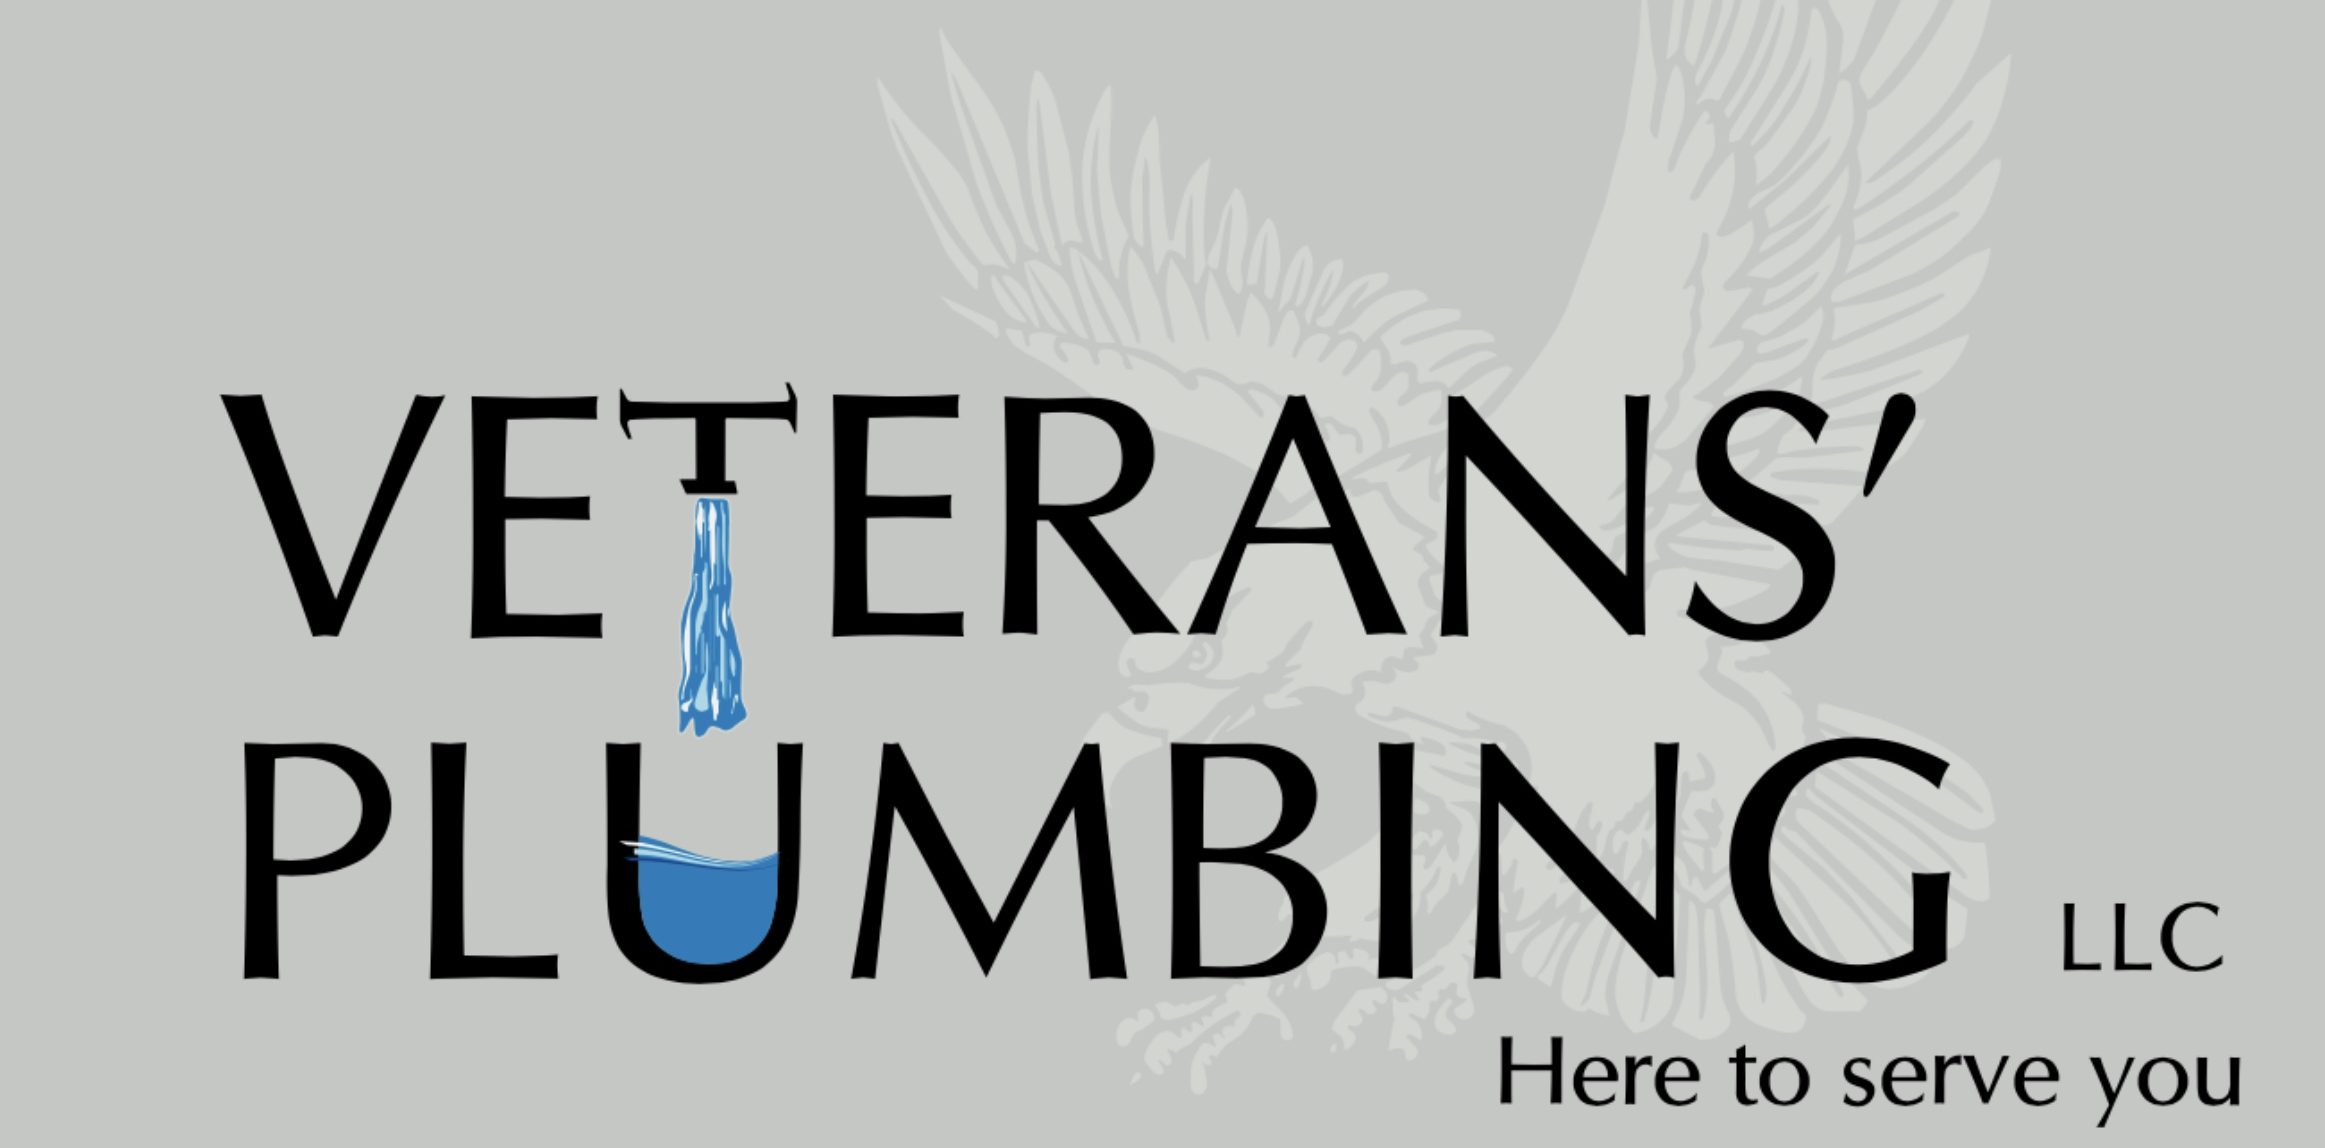 Veterans’ Plumbing LLC